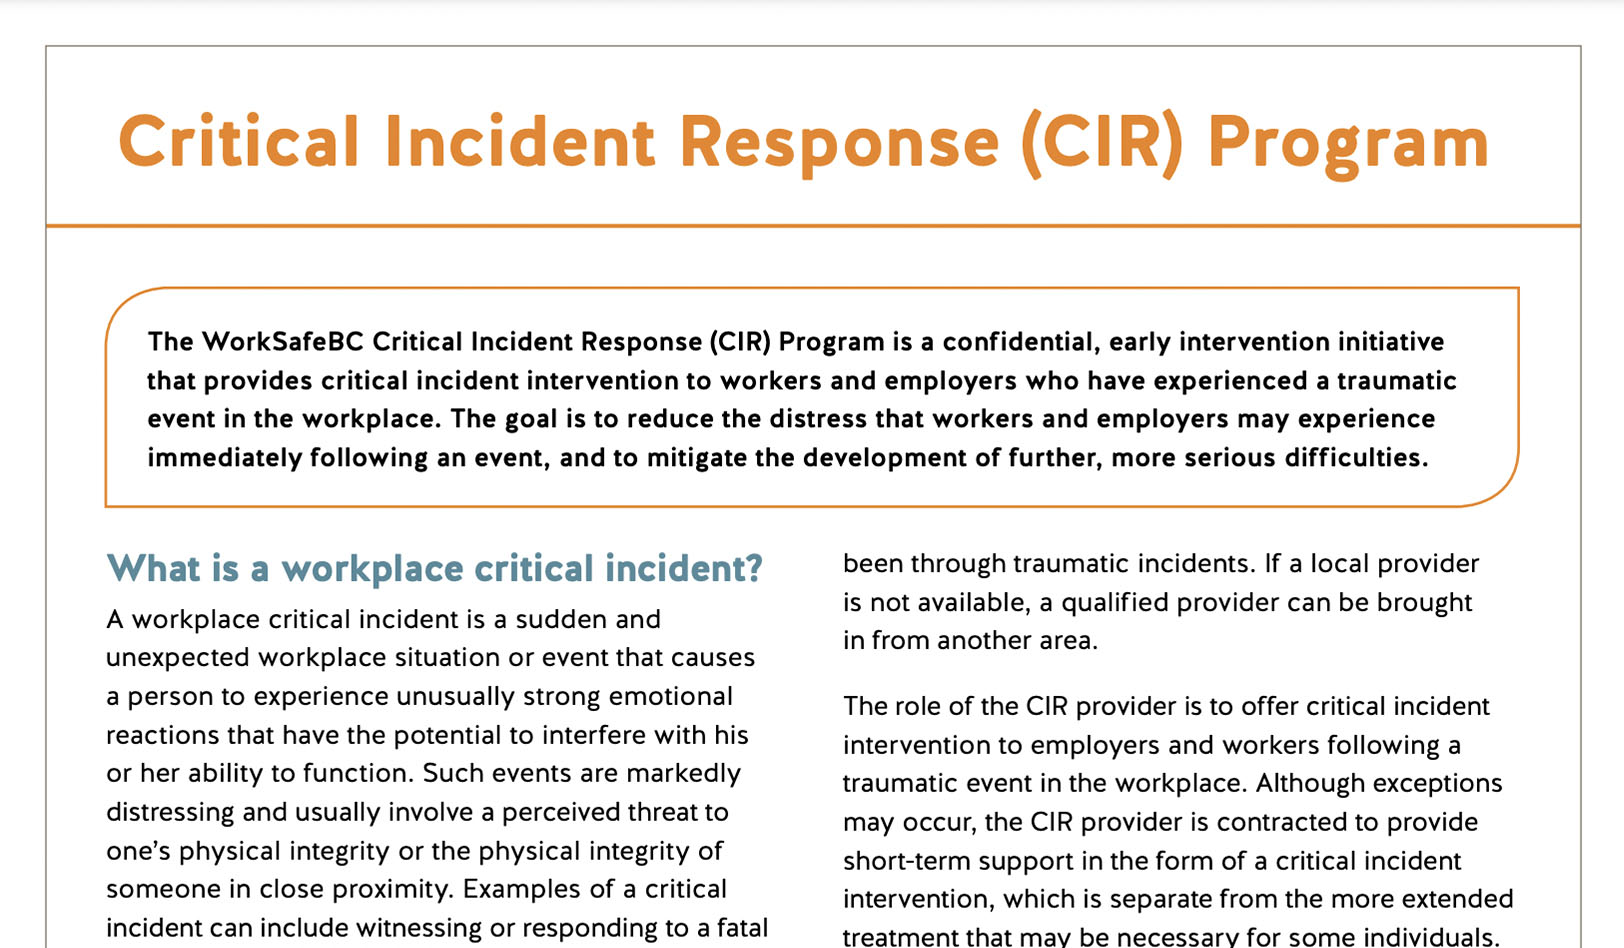 WorkSafeBC’s Critical Incident Response (CIR) Program